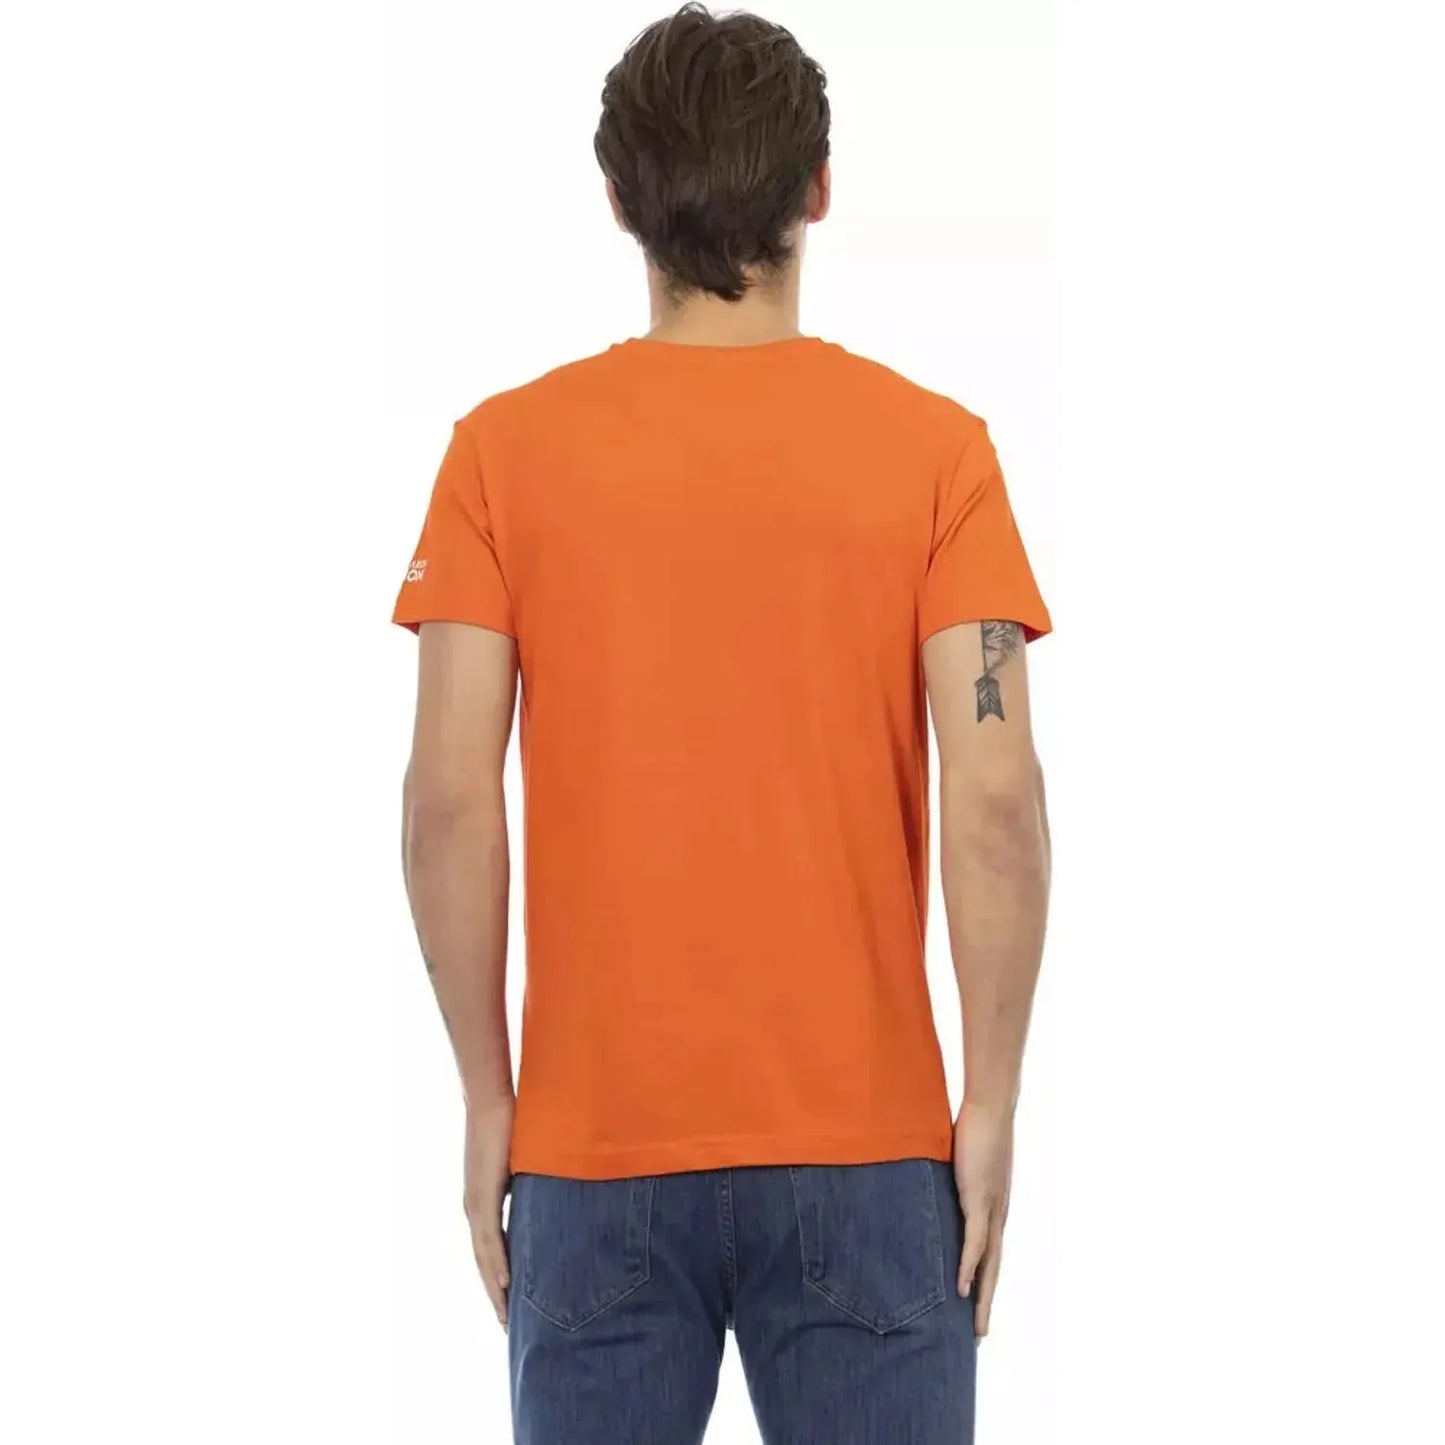 Trussardi Action Vibrant V-Neck Tee with Front Print orange-cotton-t-shirt product-22855-1736428993-20-b05b8082-a2e.webp